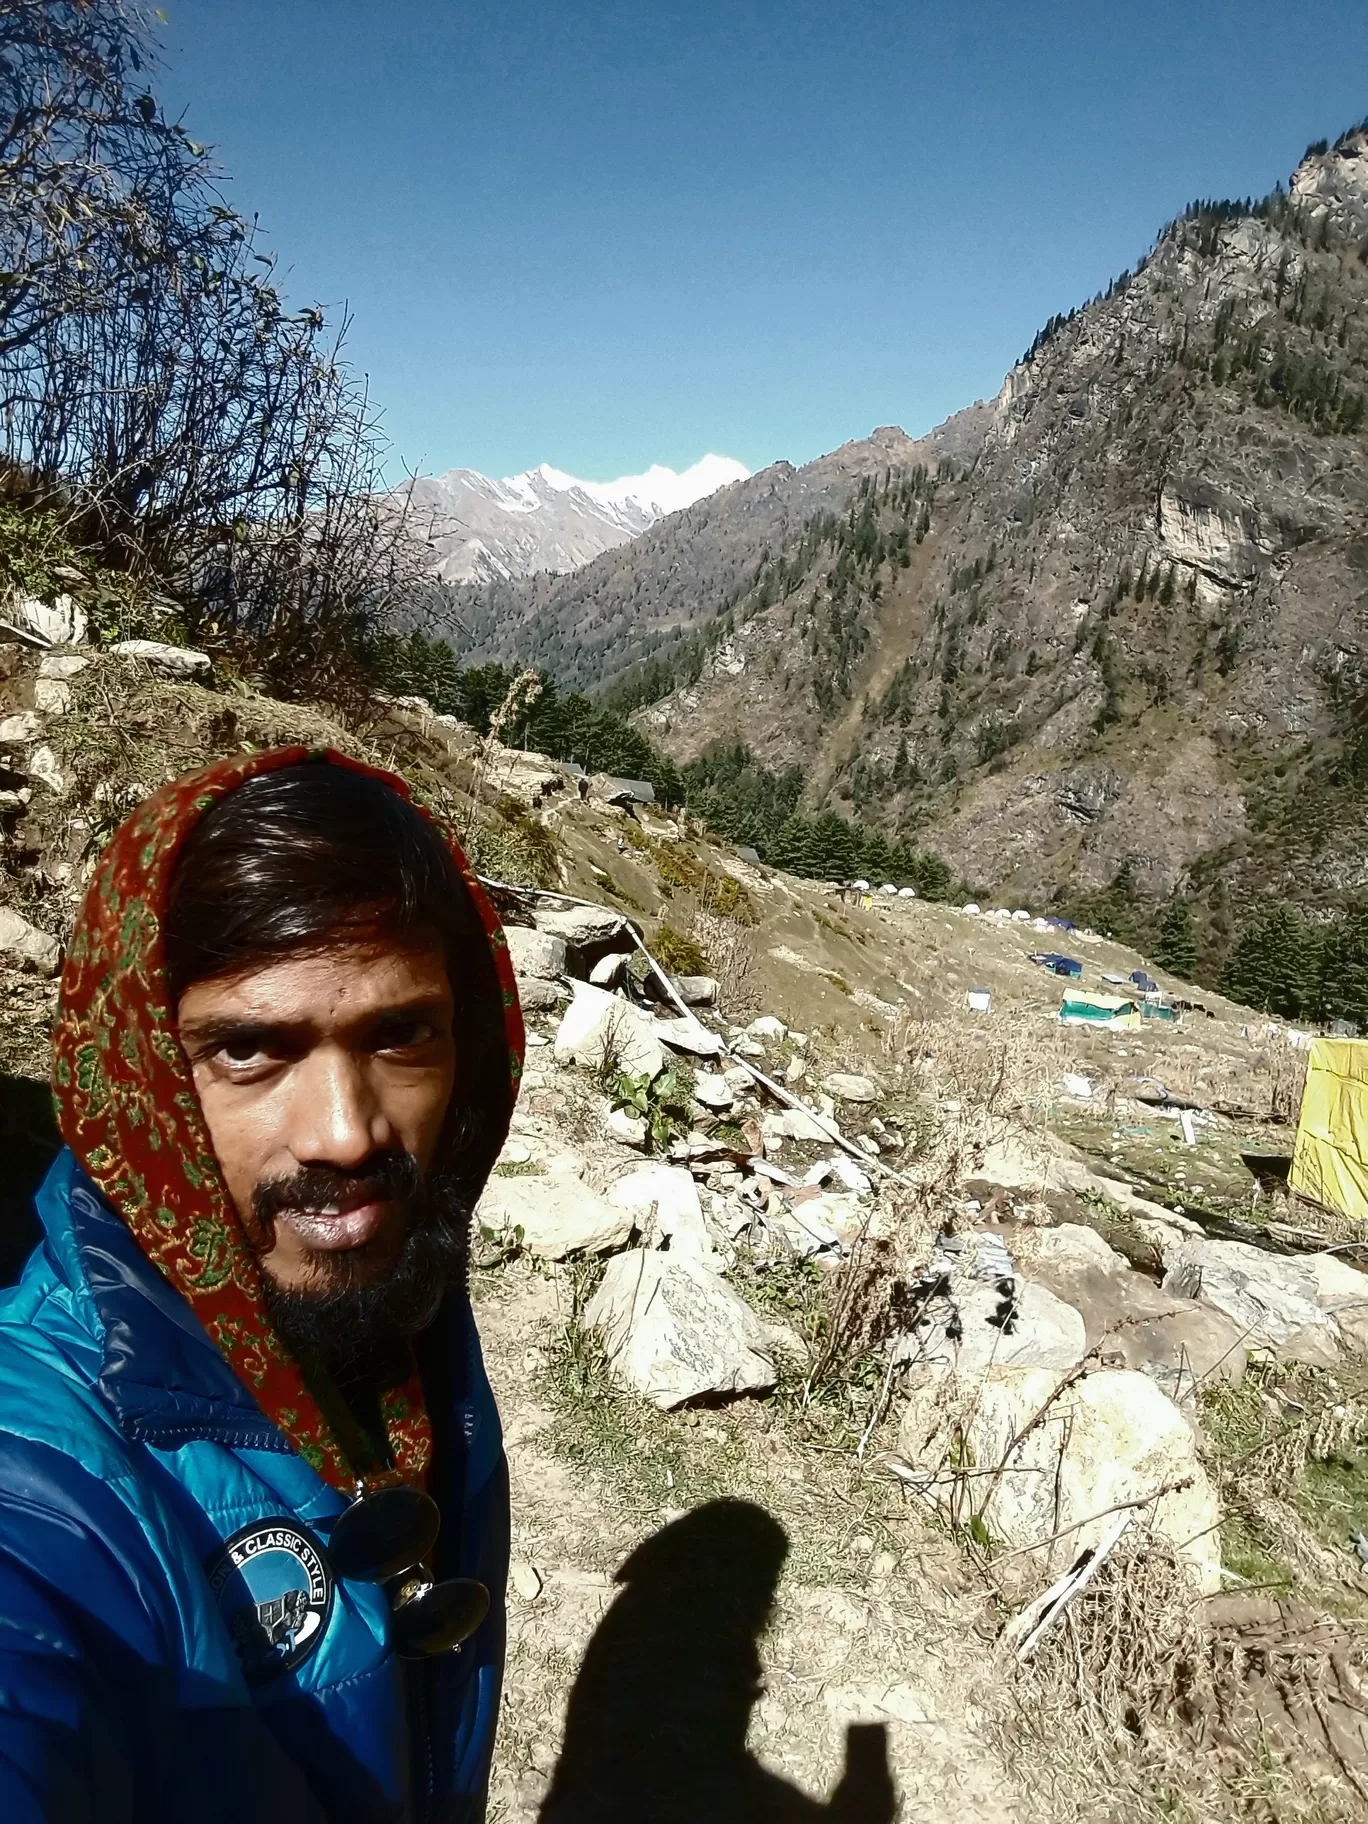 Photo of Kheerganga - Sunshine Himalayan Camp By Naveen Hyd_rider